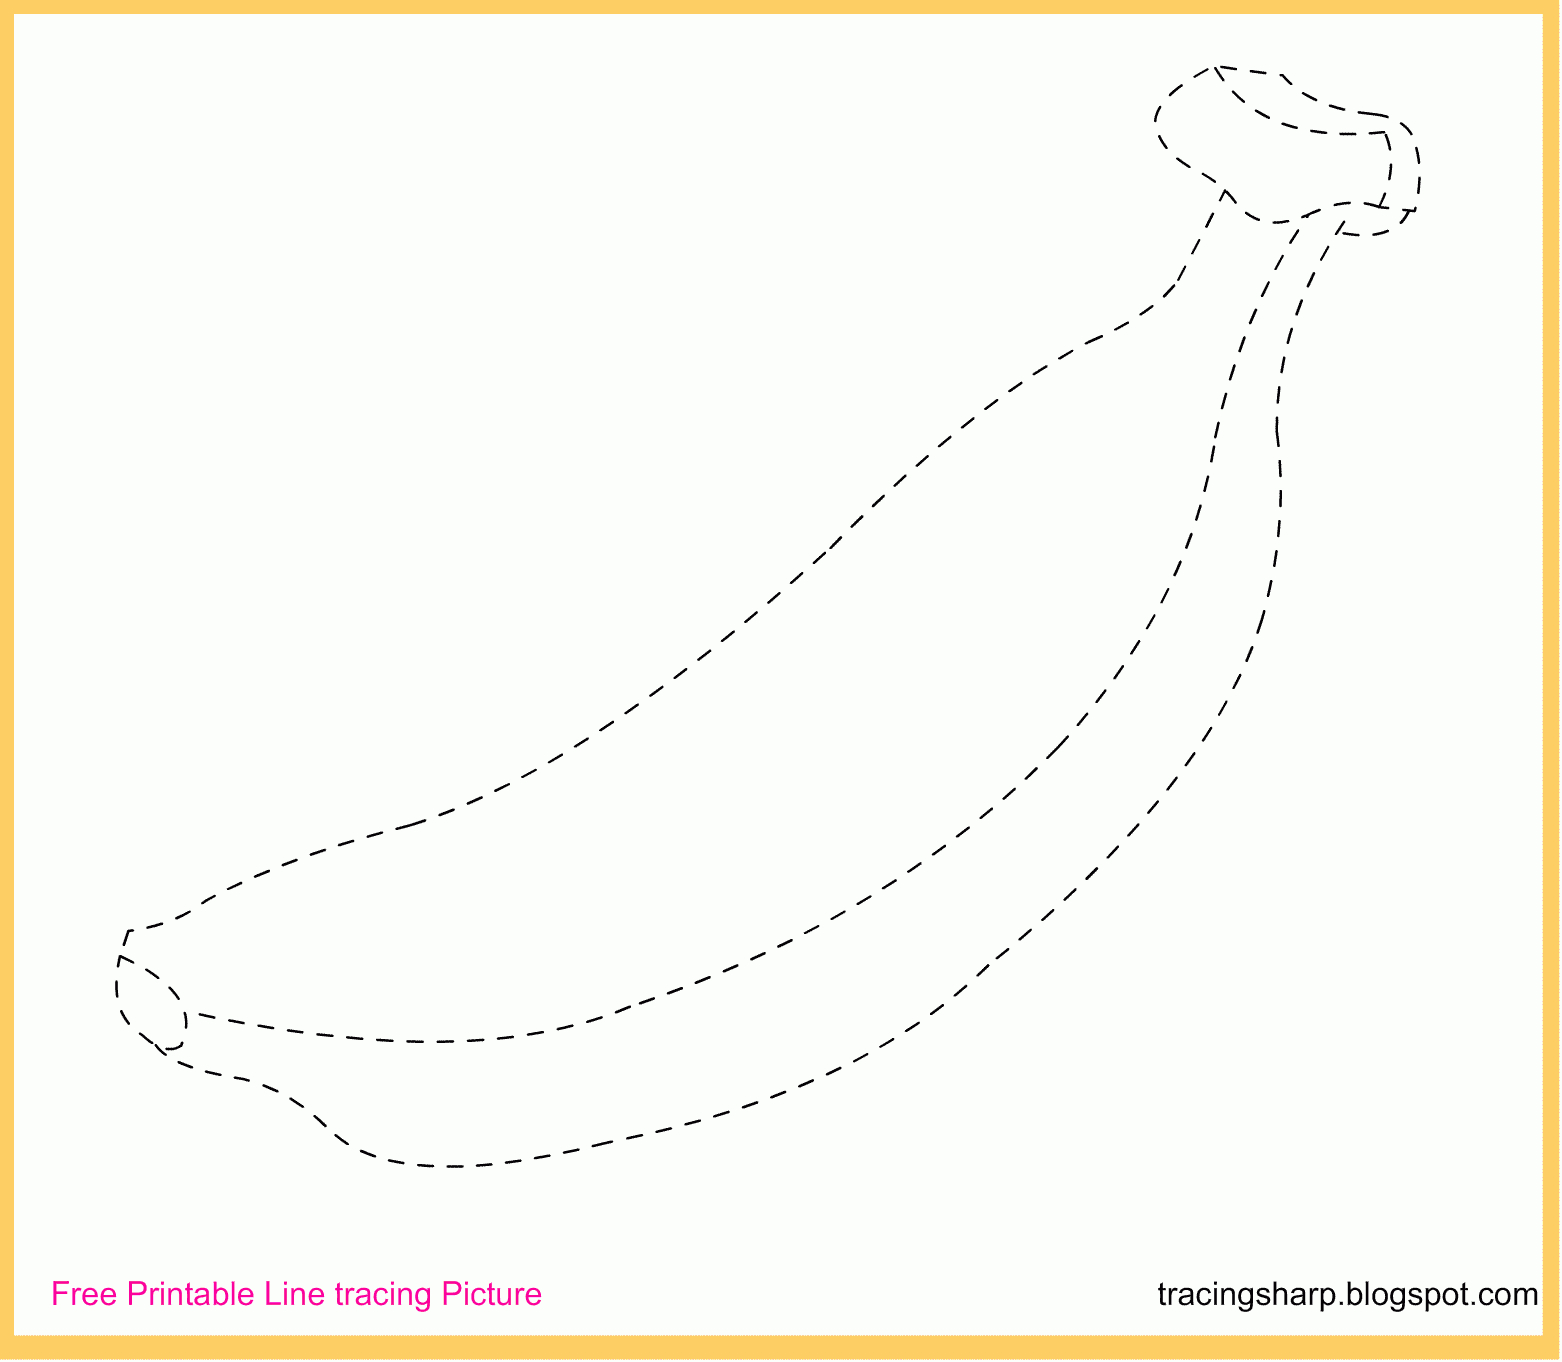 Free Tracing Line Printable: Banana Tracing Picture - Free Printable Preschool Worksheets Tracing Lines